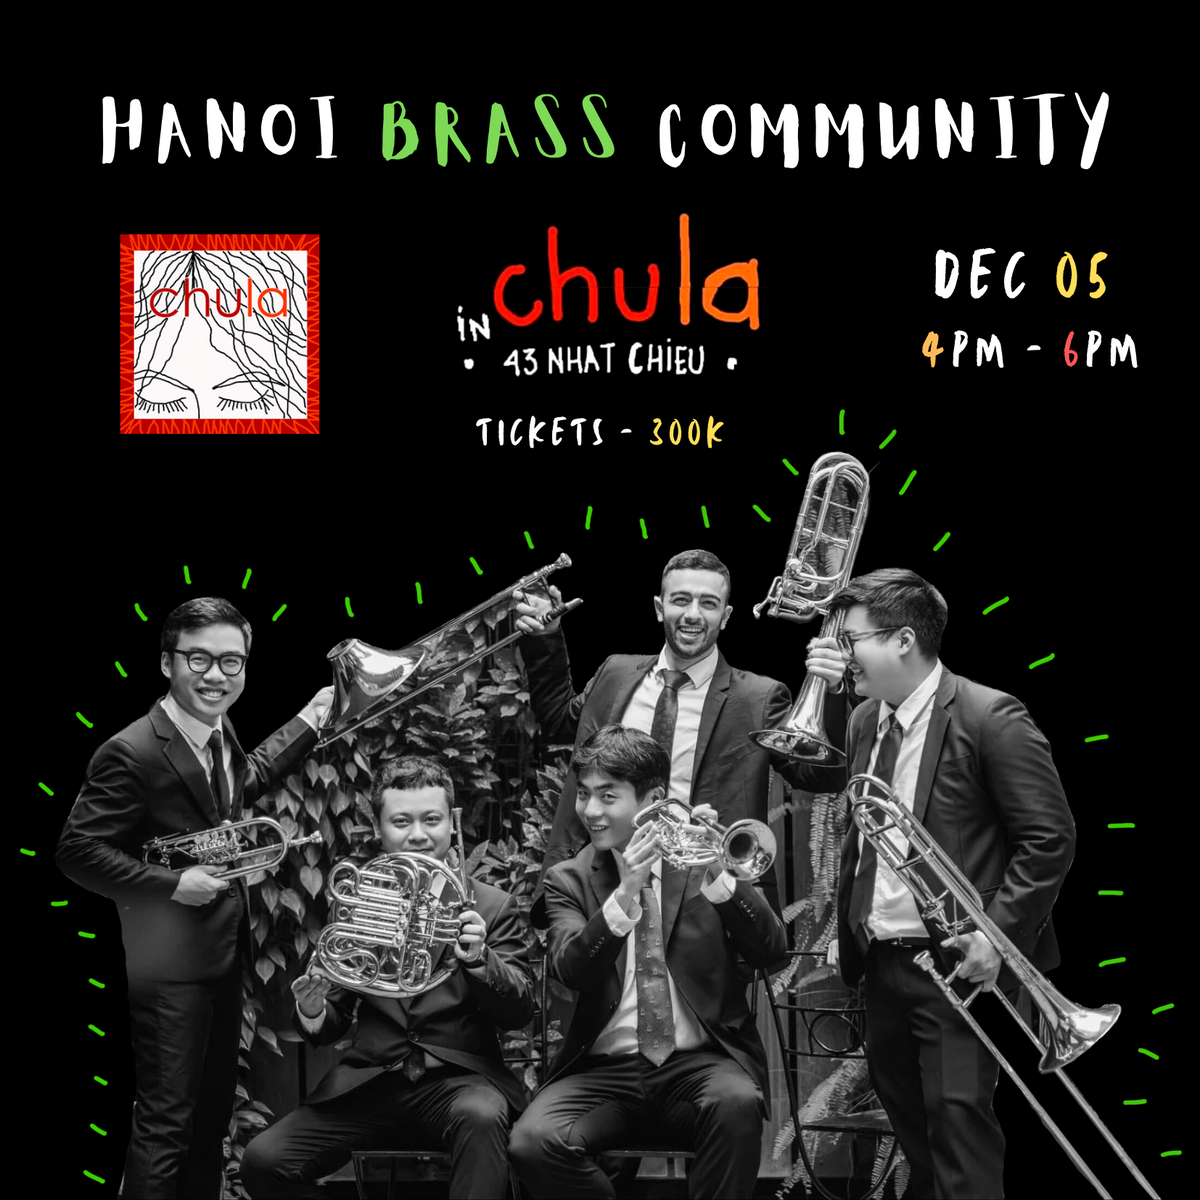 Dec 05 - Hanoi Brass Community in Chula